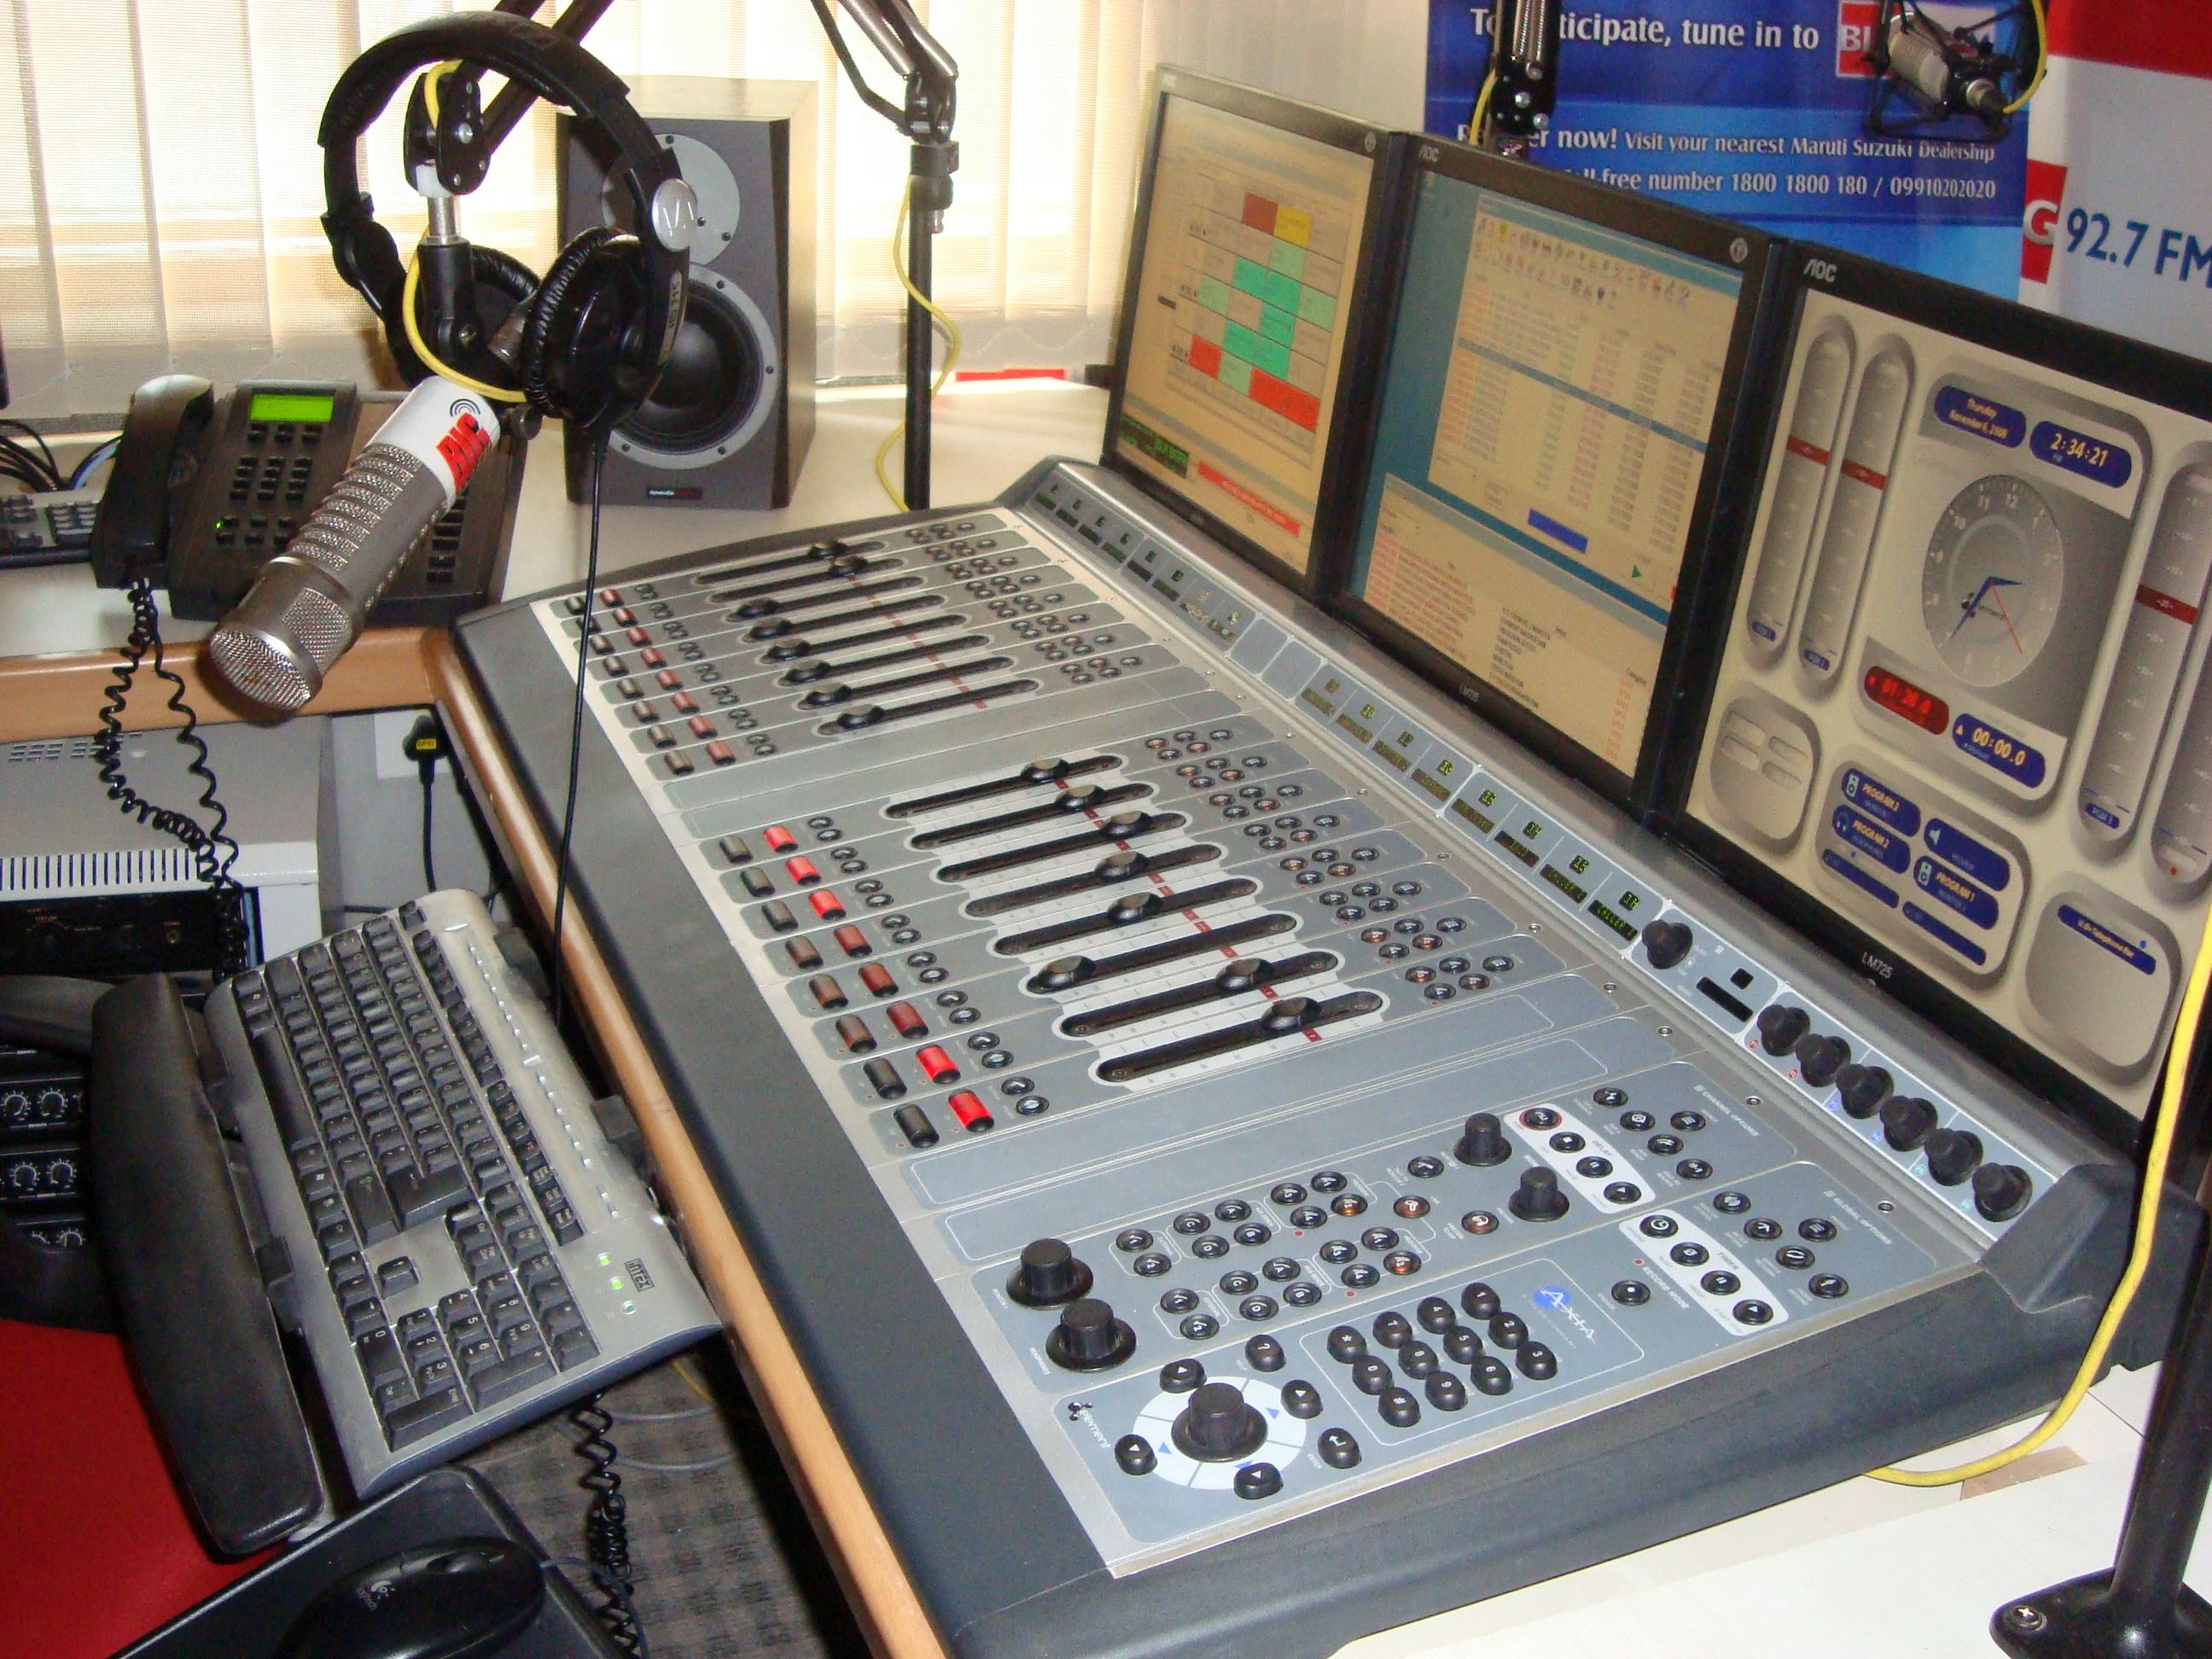 Tfn tune. Fm станции. RS 23 Radio Stations. Indoor Radio Stations. Румор Медиа радио.